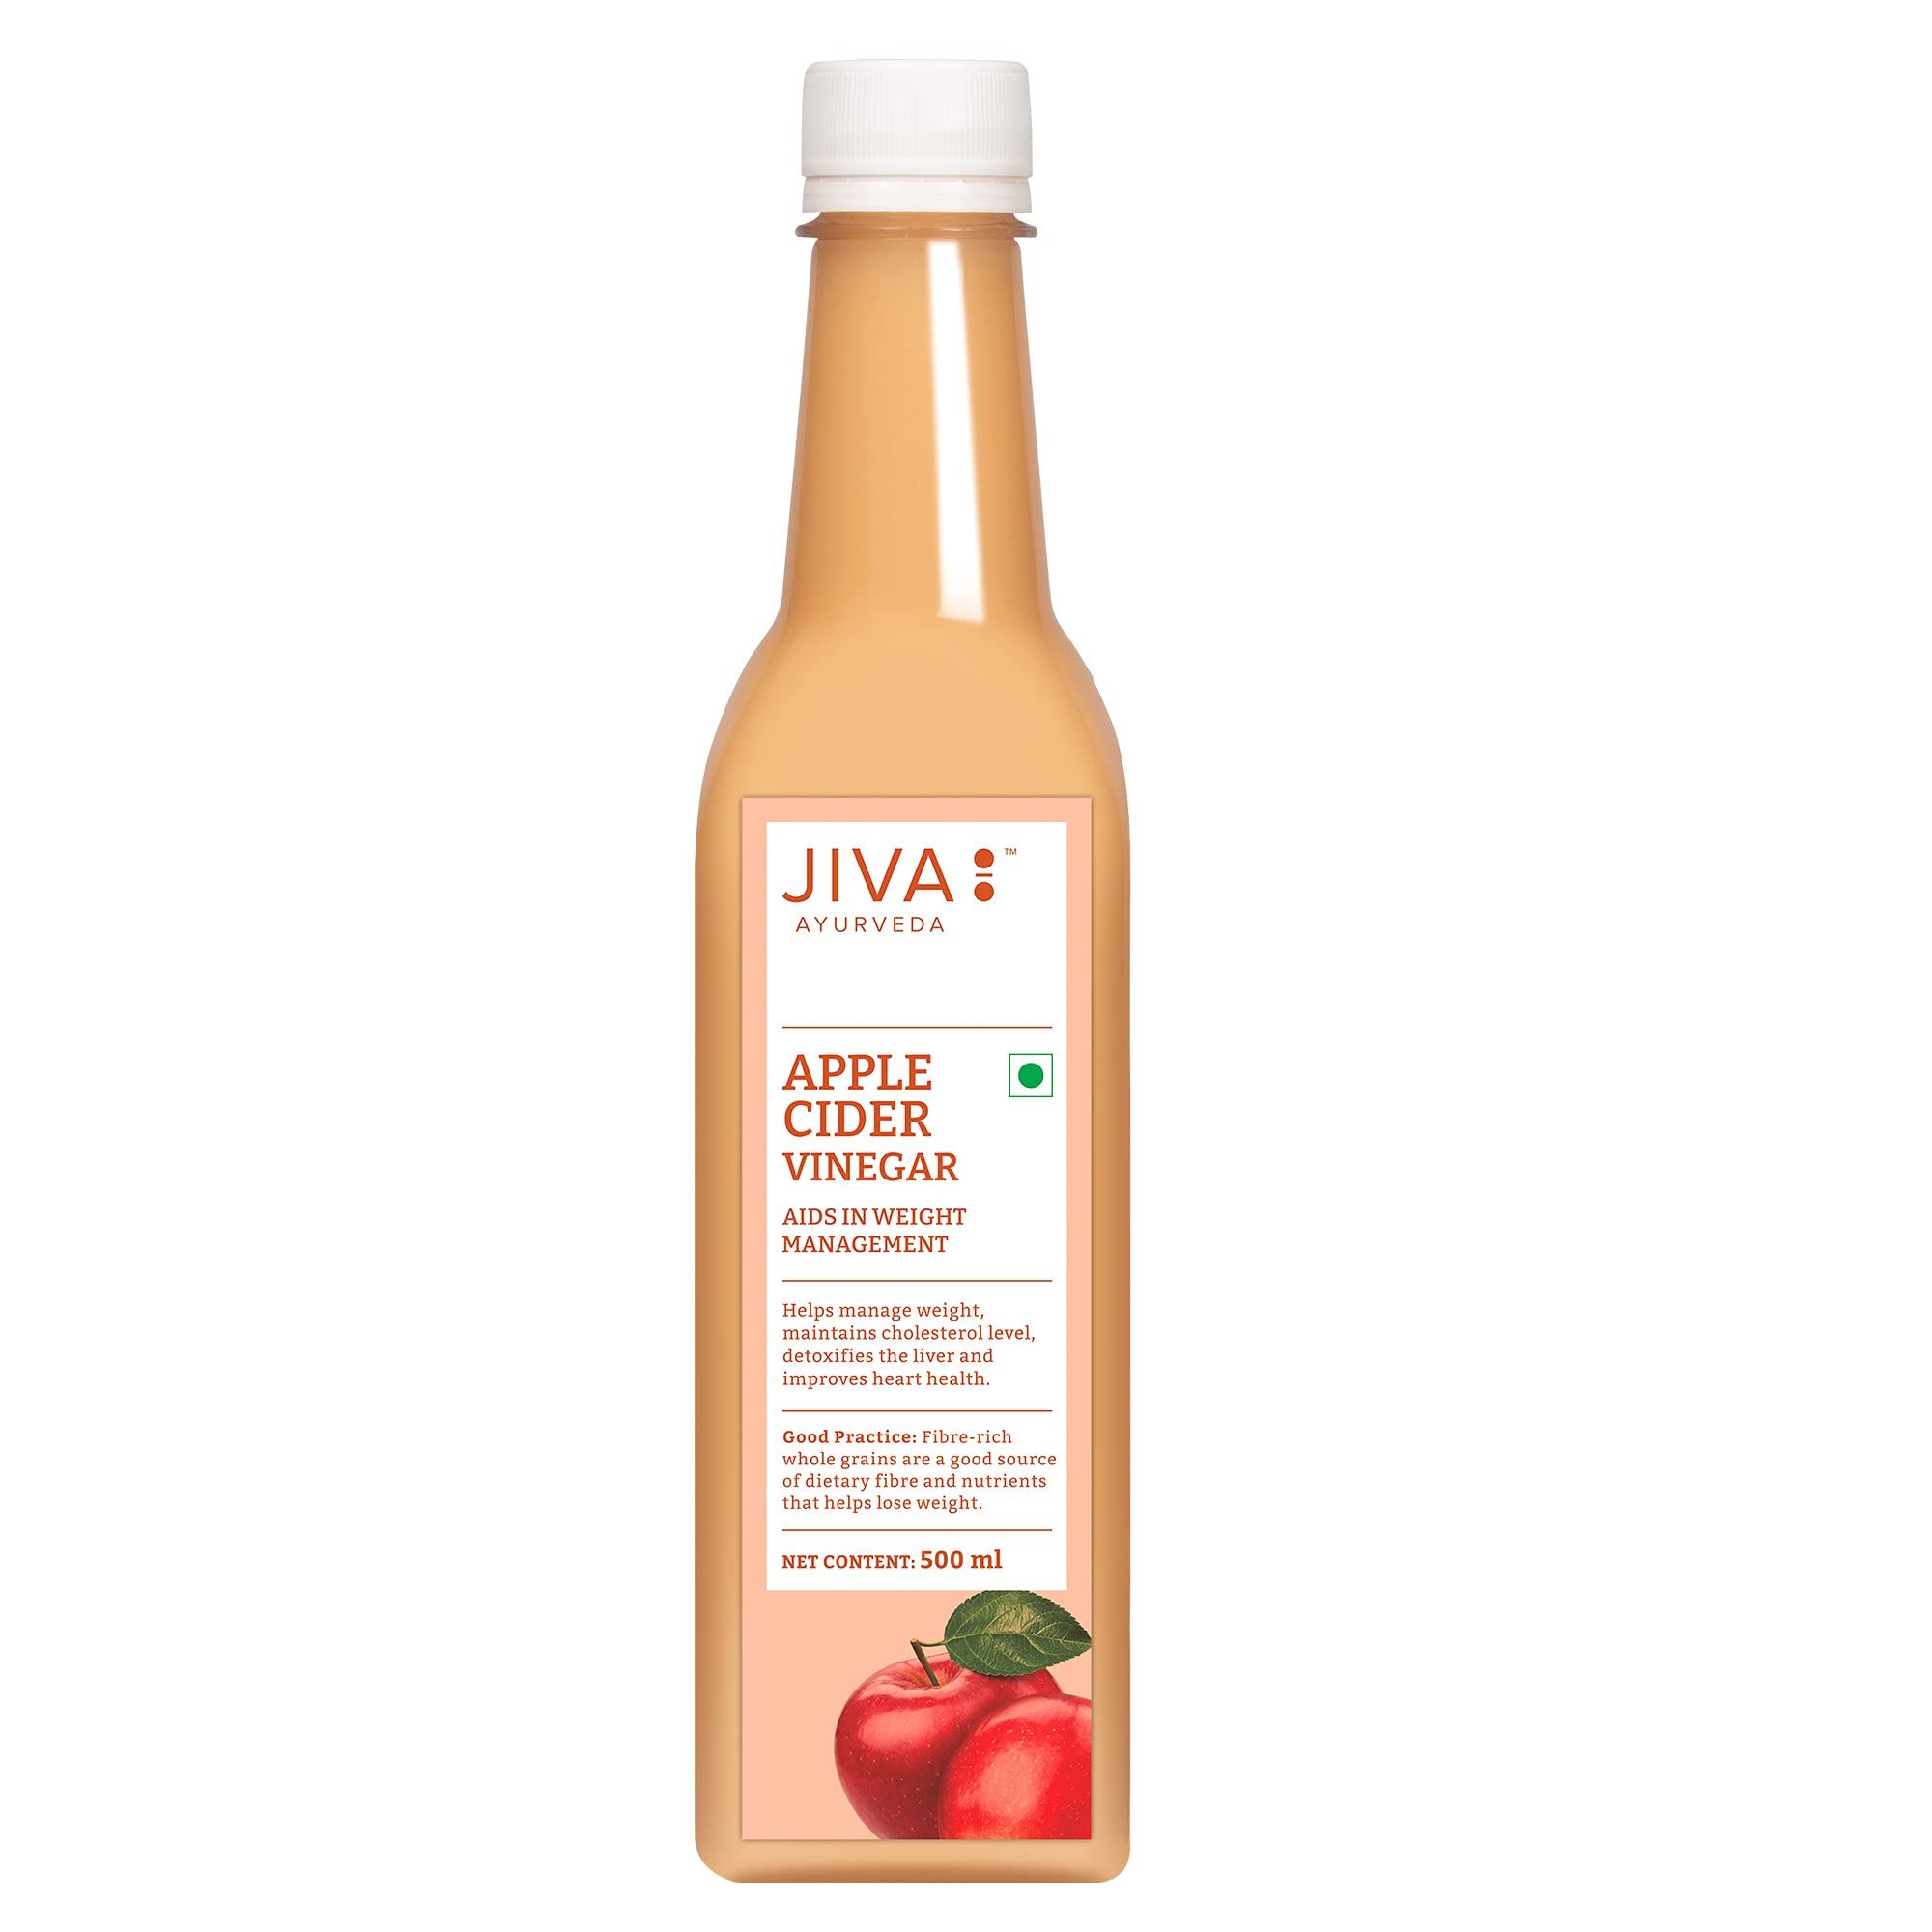 Buy Jiva Ayurveda Apple Cider Vinegar at Best Price Online